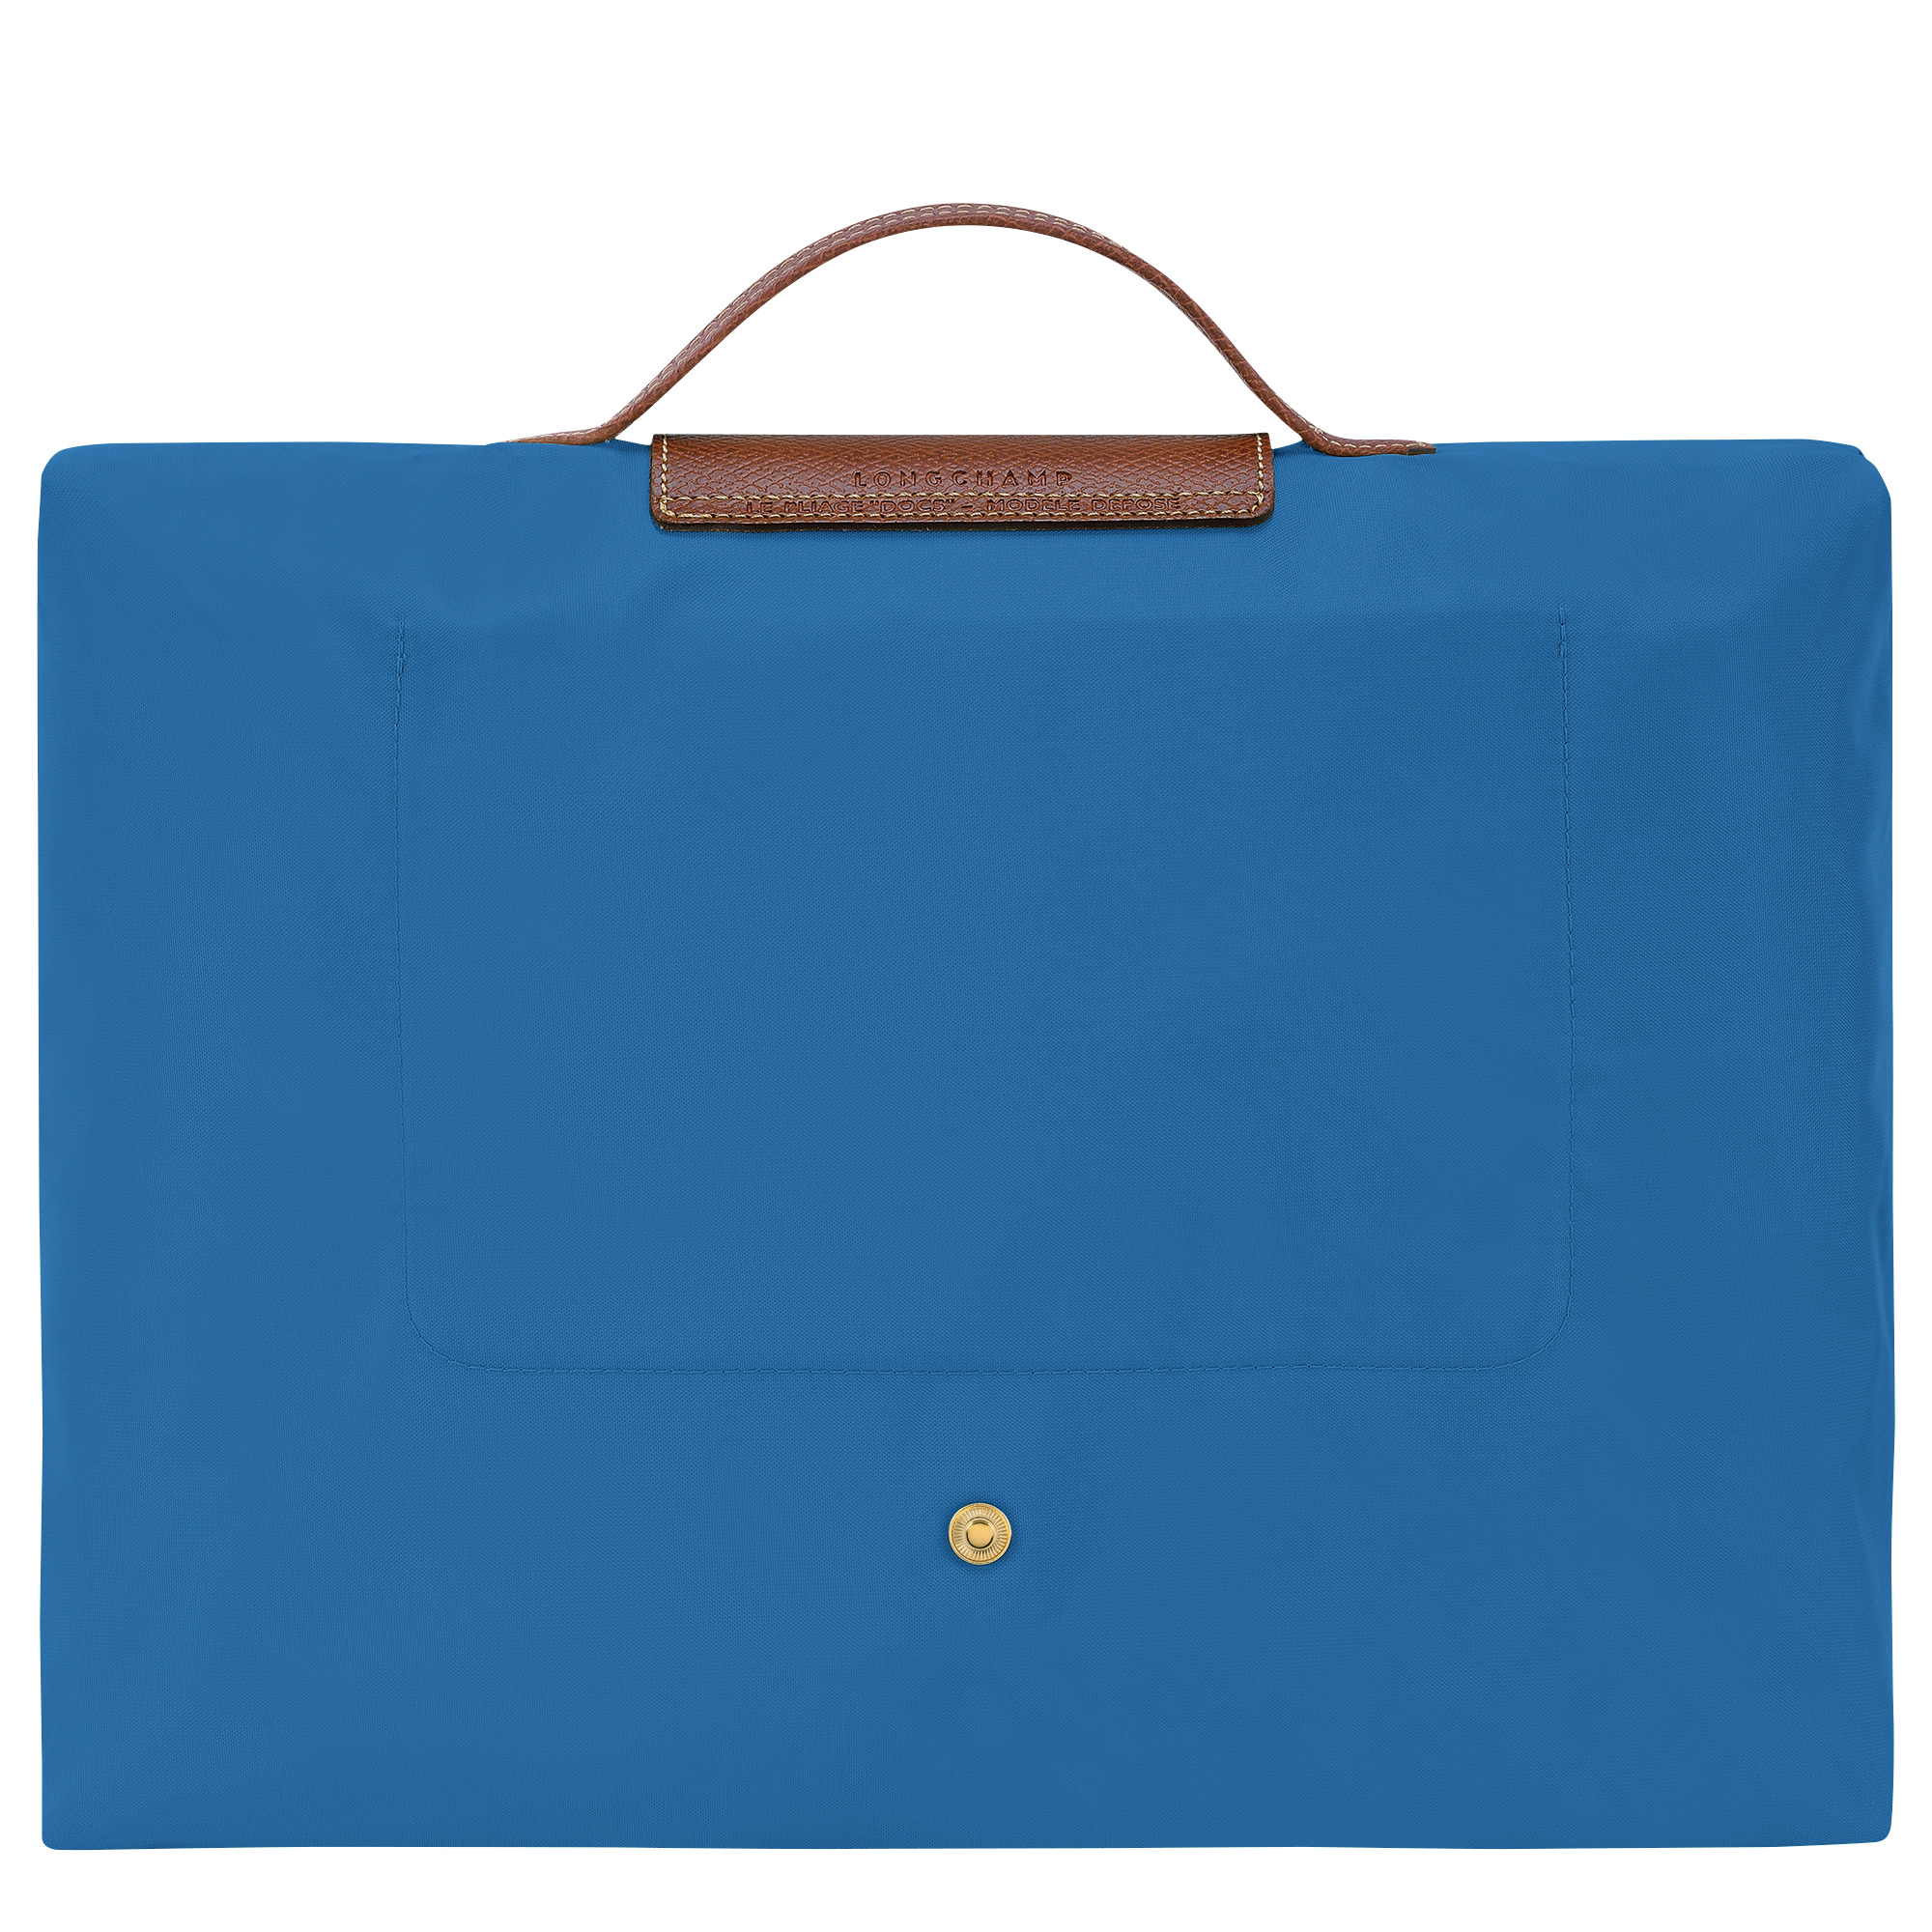 Le Pliage Original S Briefcase Cobalt - Recycled canvas - 4